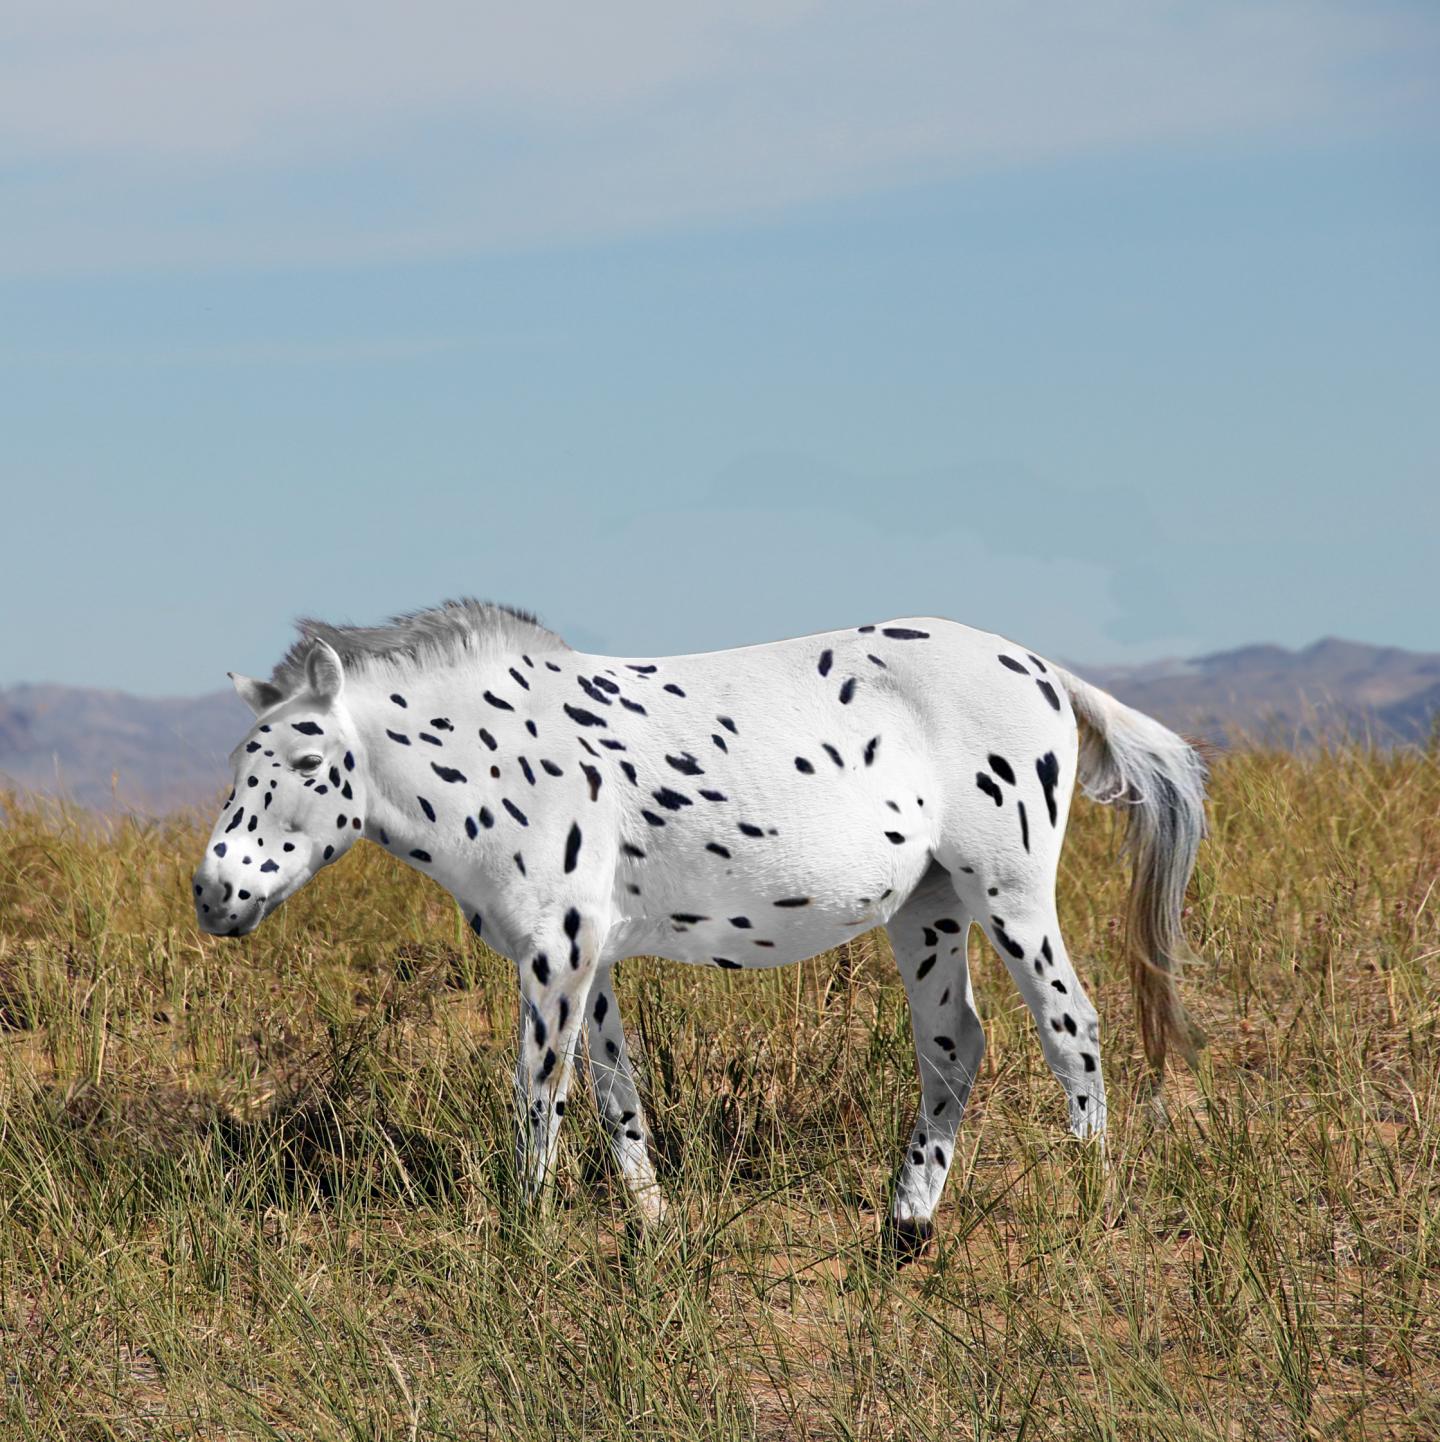 Artistic Reconstruction of Botai Horses Based On Genetic Evidence